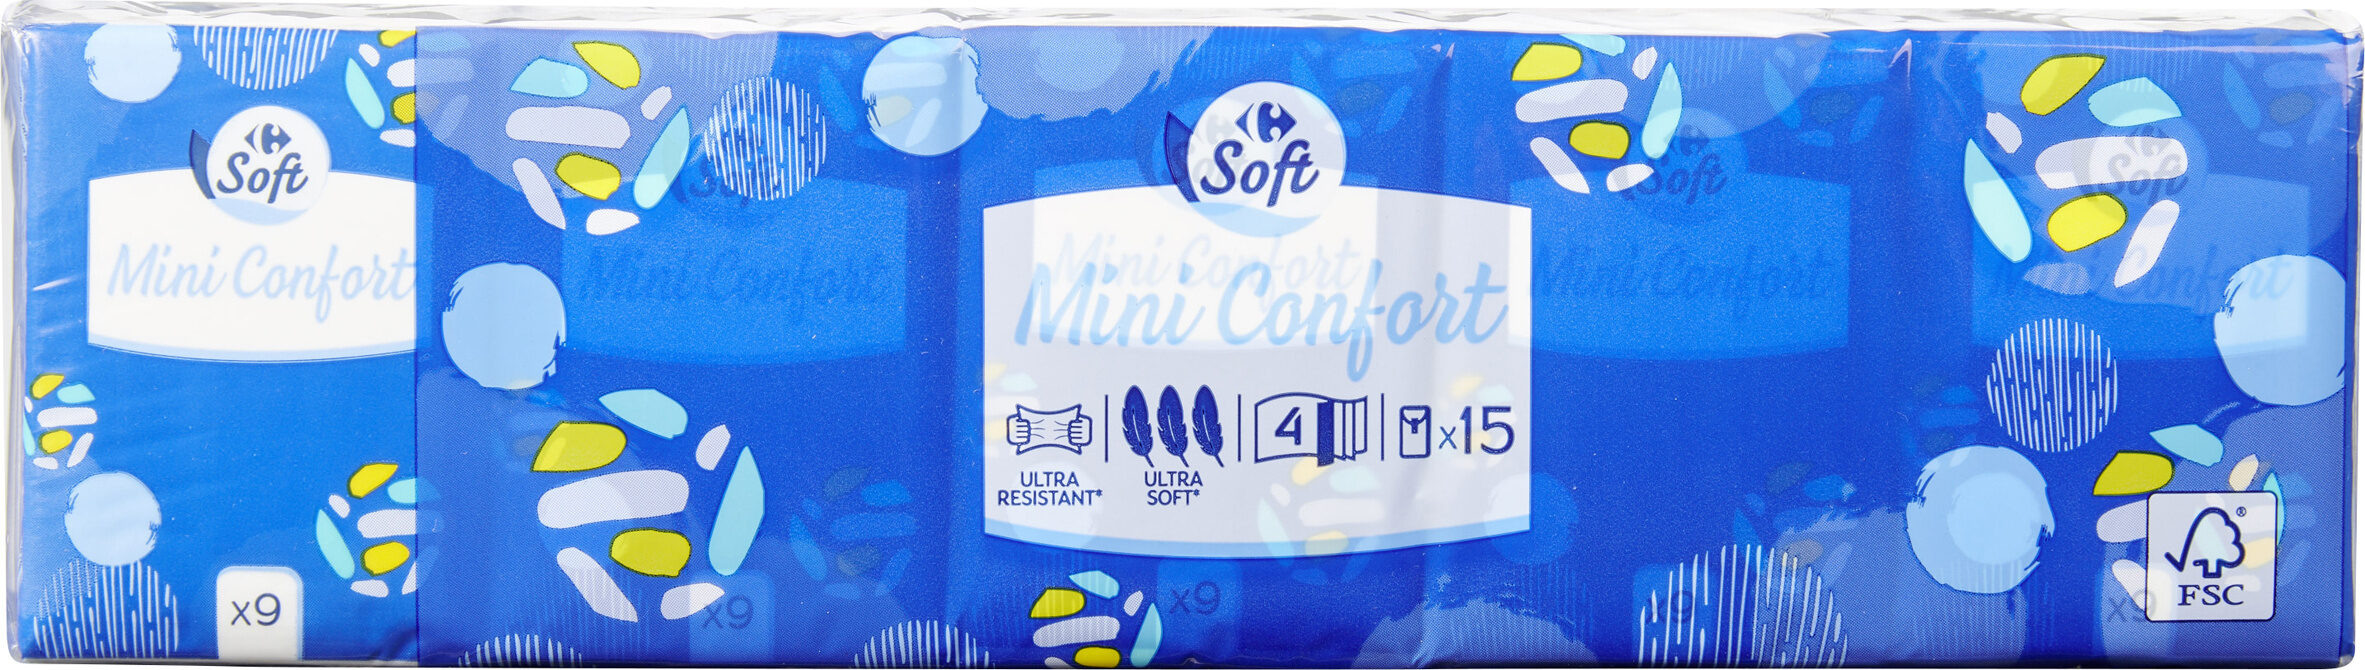 mini confort - Produkt - fr